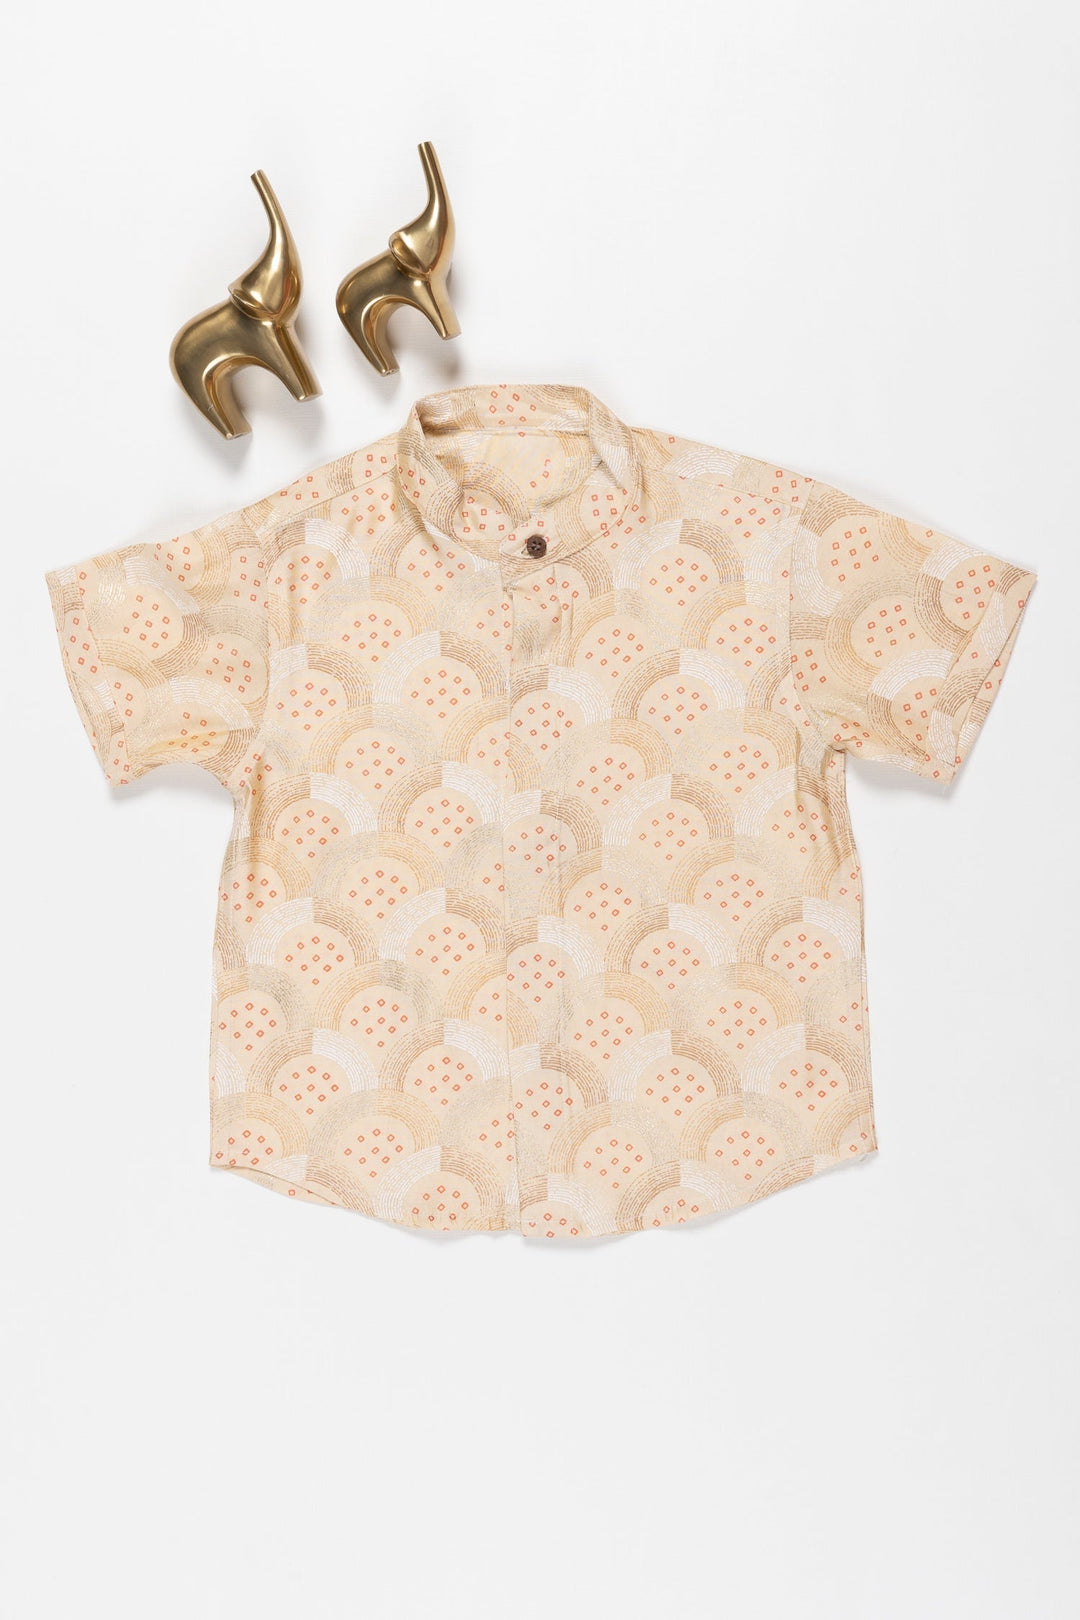 The Nesavu Boys Cotton Shirt Boys Geometric Pattern Cotton Shirt - Casual Elegance Nesavu 16 (1Y) / Red / Viscose Silk BS134A-16 Boys' Cotton Shirt with Geometric Print | Comfort & Style for Everyday Wear | The Nesavu